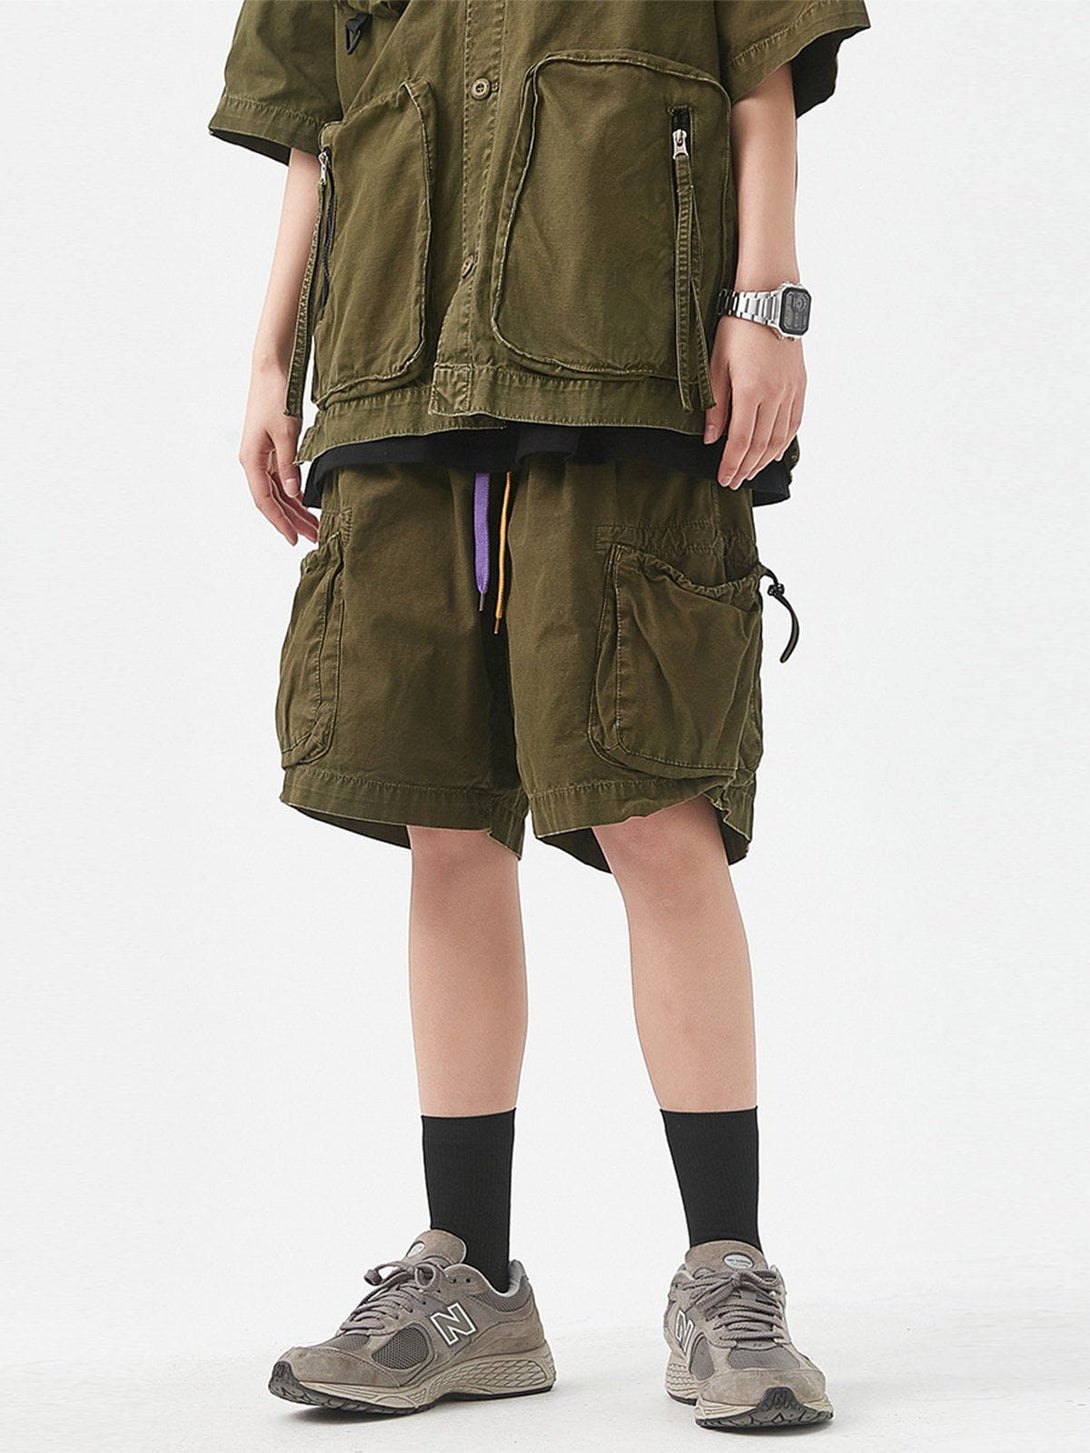 Majesda® - Multiple Pockets Drawstring Shorts outfit ideas streetwear fashion